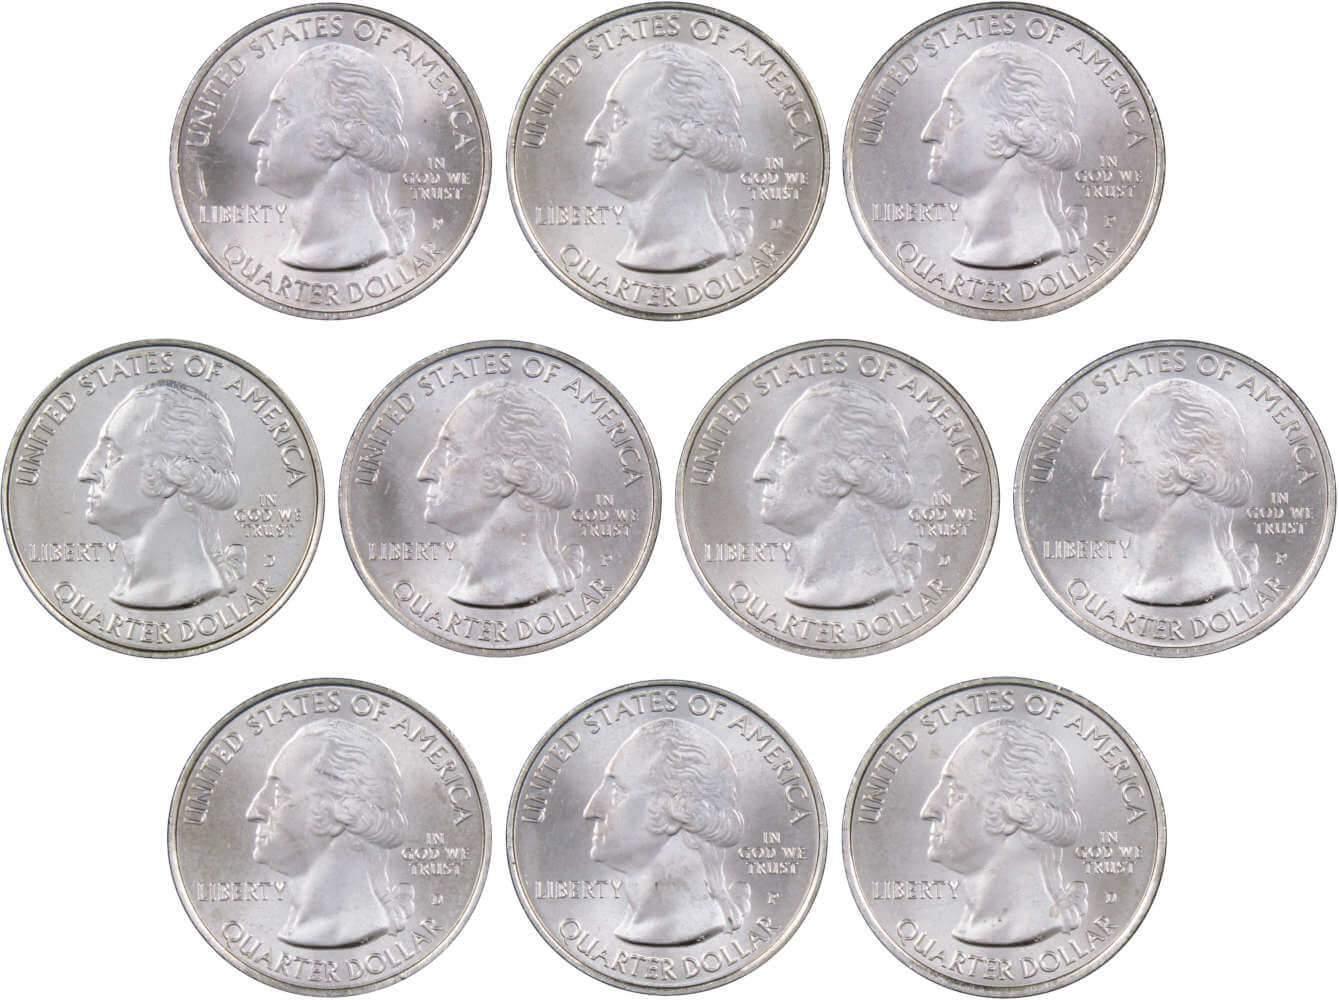 2012 P&D National Park Quarter 10 Coin Set Uncirculated Mint State 25c